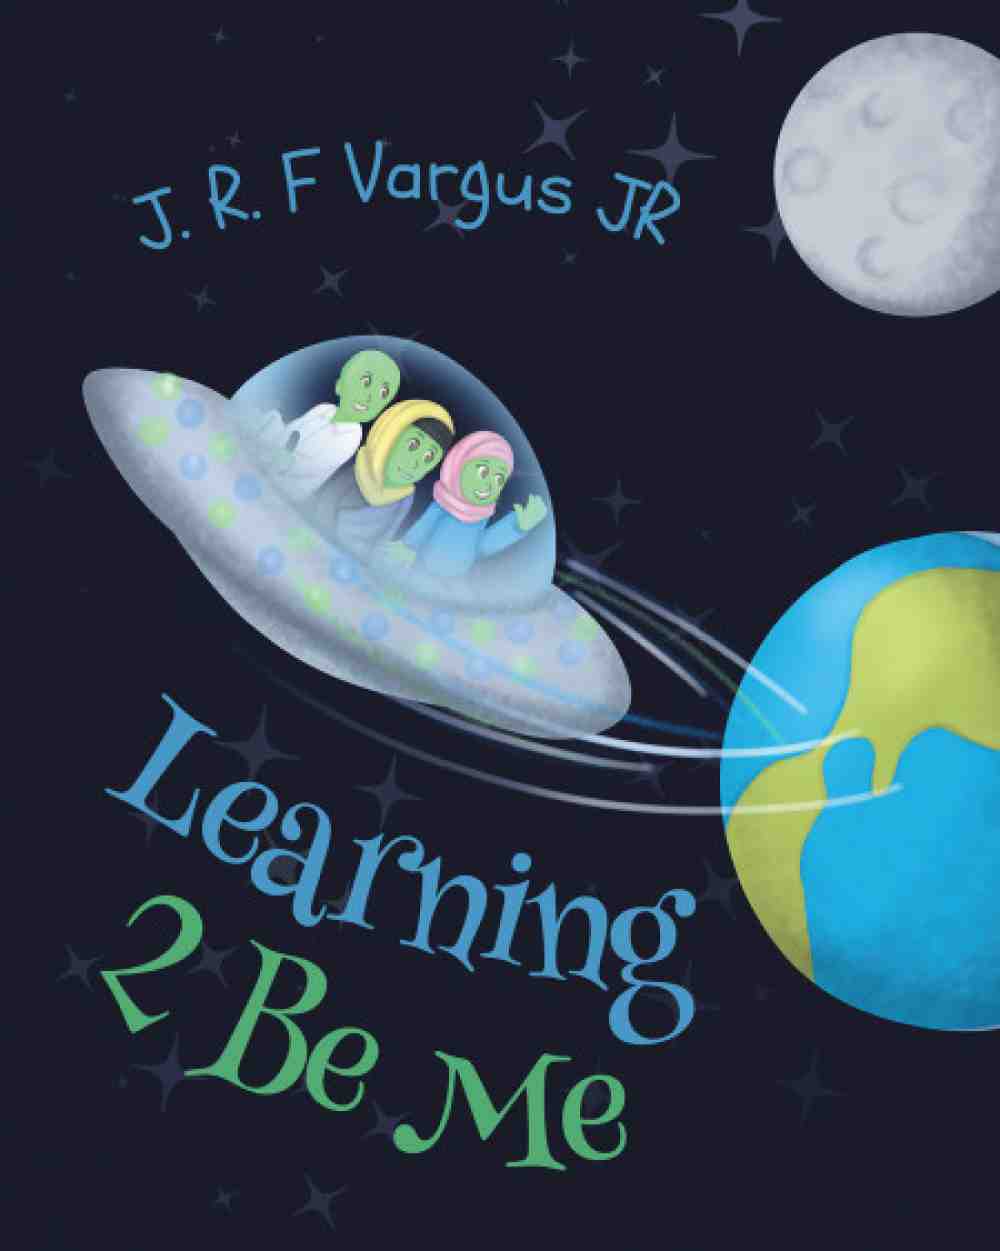 Anzeige: Lesetipps für Gütersloh: J. R. F. Vargus junior, »Learning 2 Be Me«